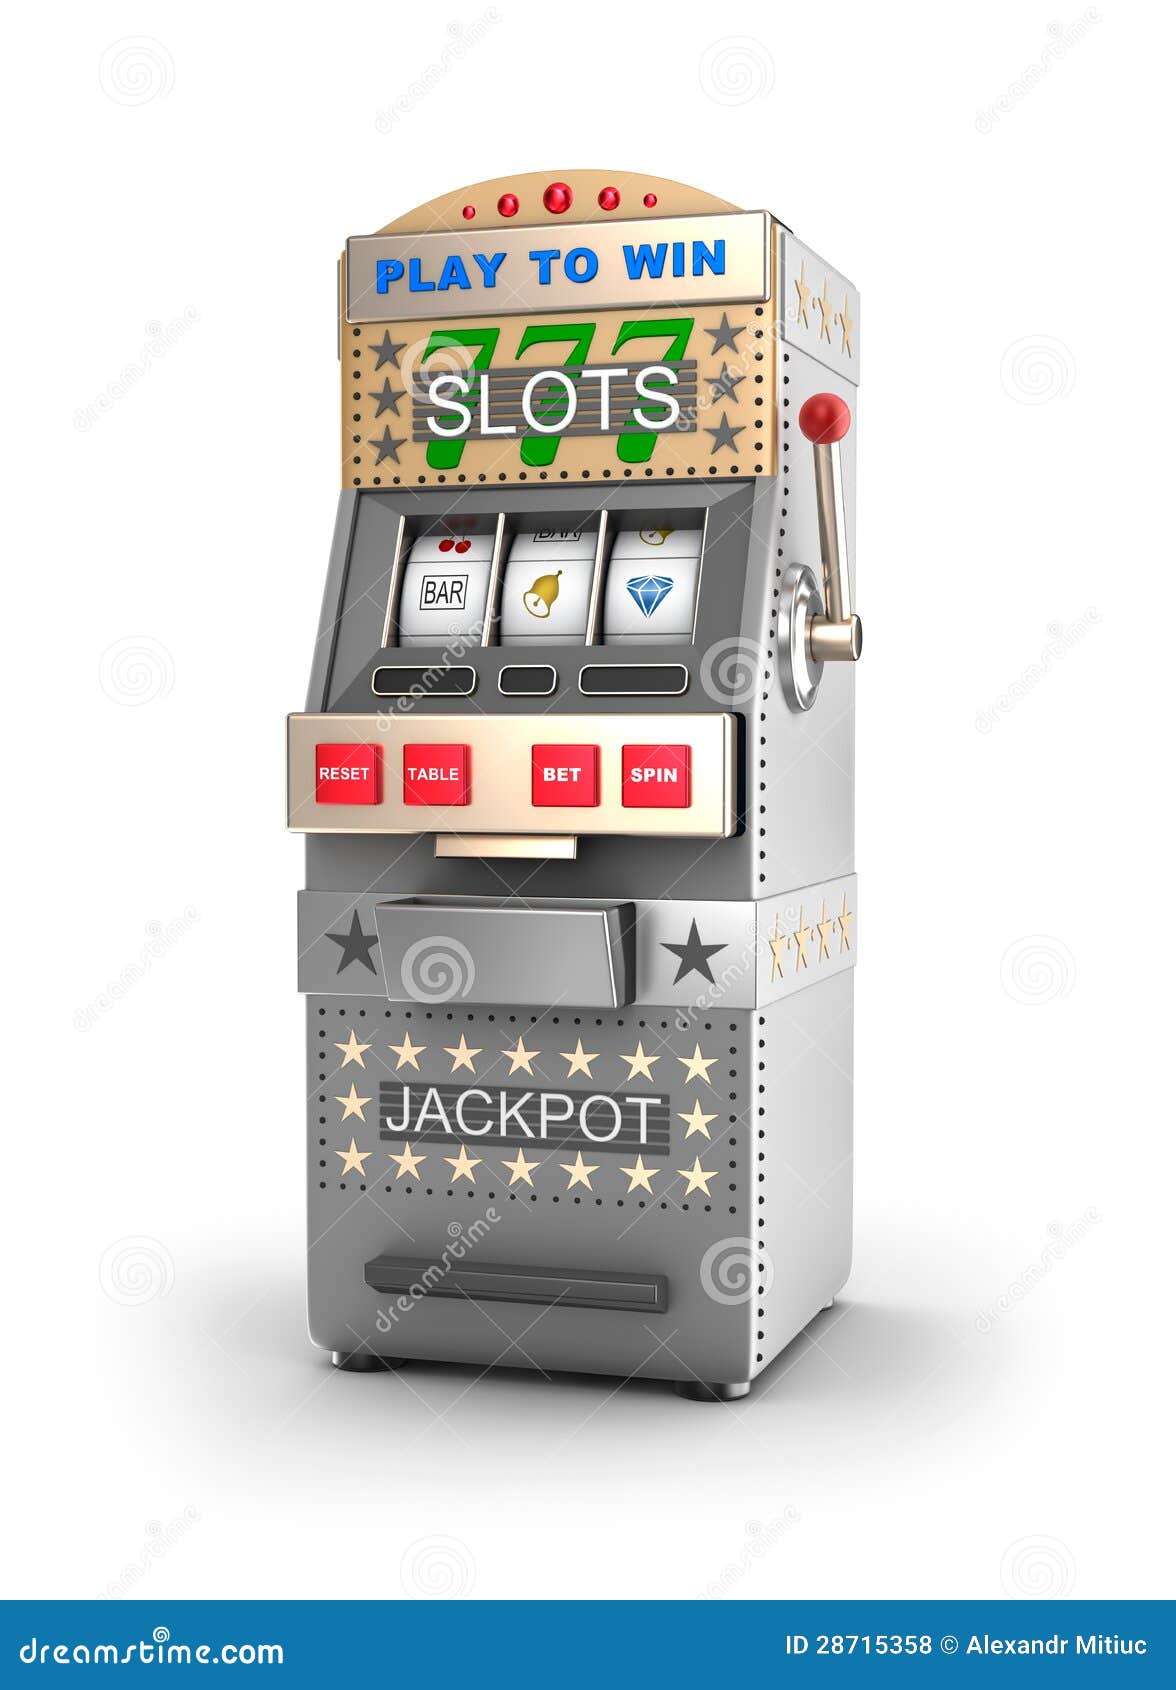 a slot machine, gamble machine.